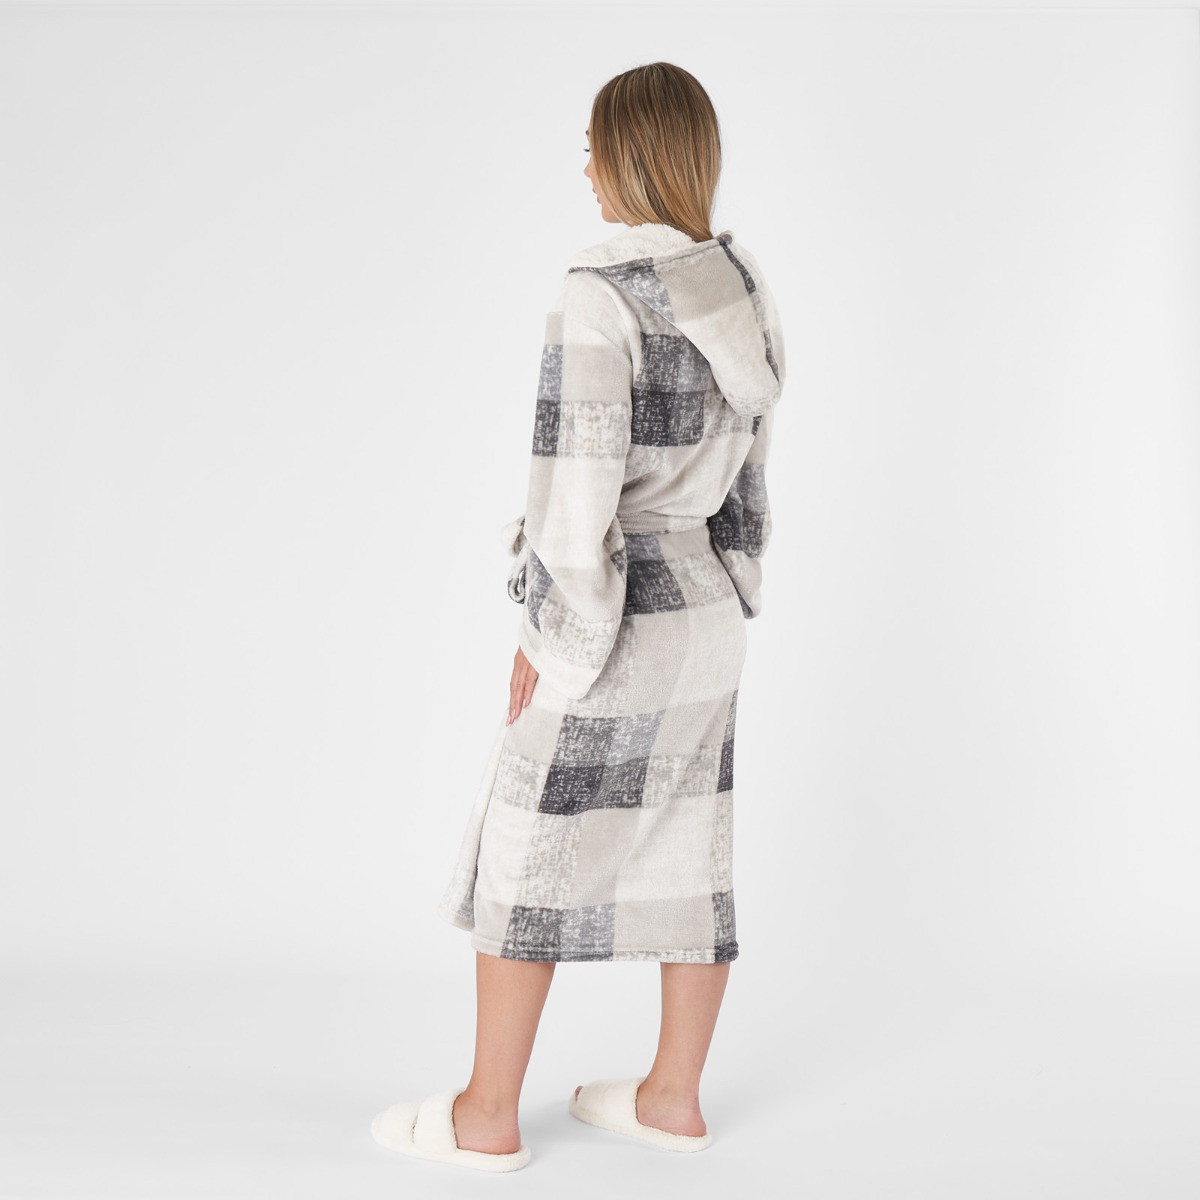 Dreamscene Check Print Hooded Sherpa Fleece Dressing Gown - Grey >